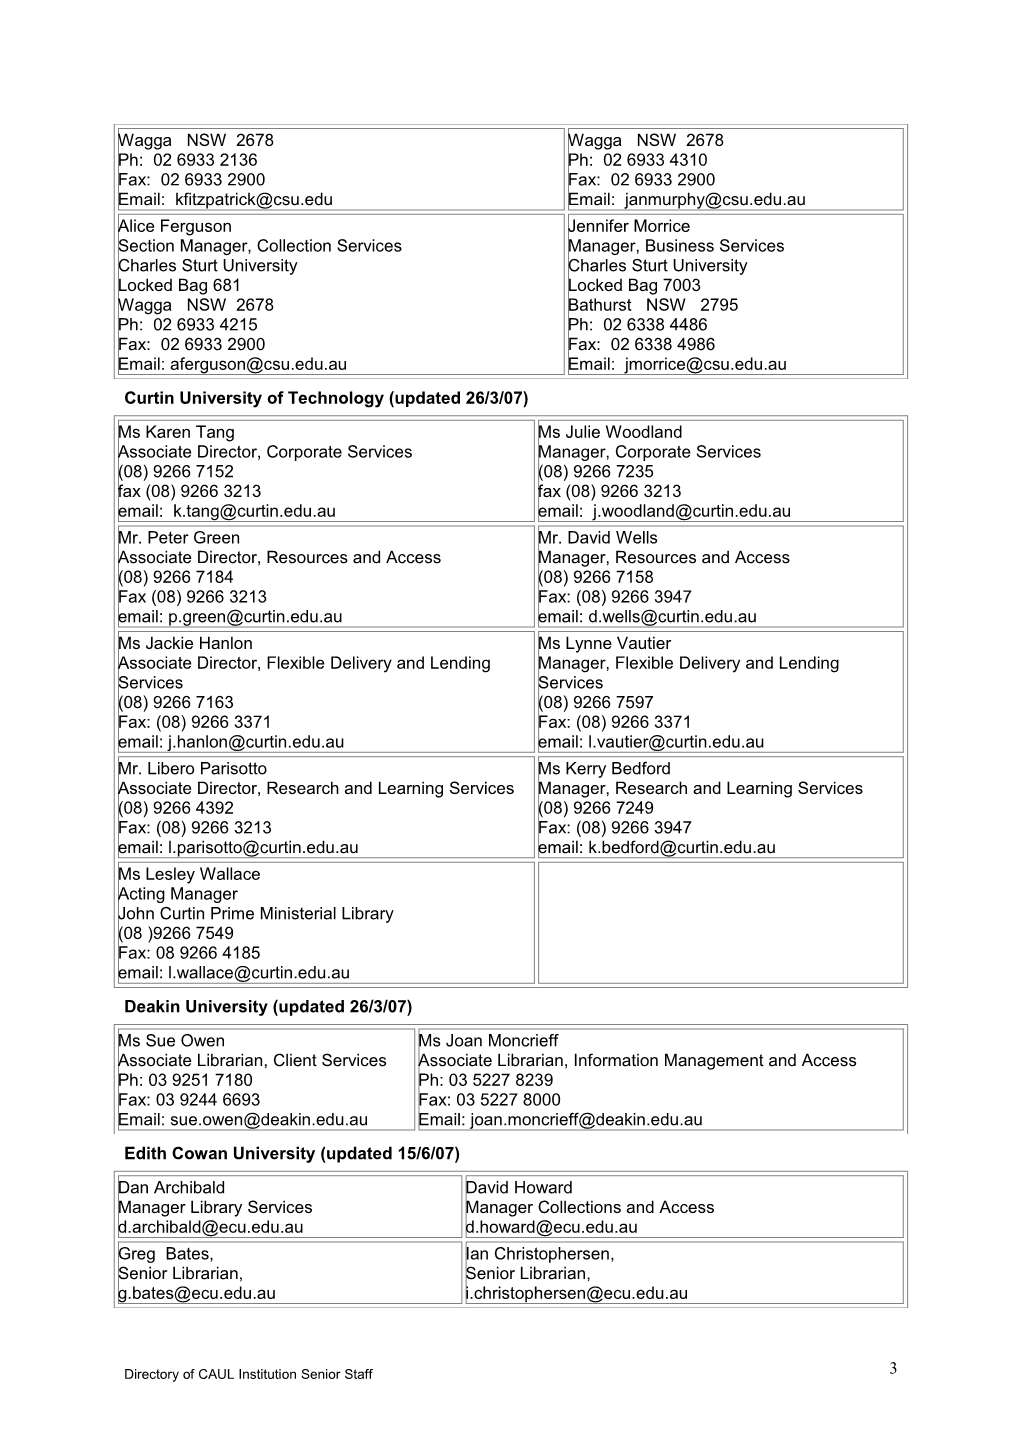 Directory of CAUL Institution Senior Staff